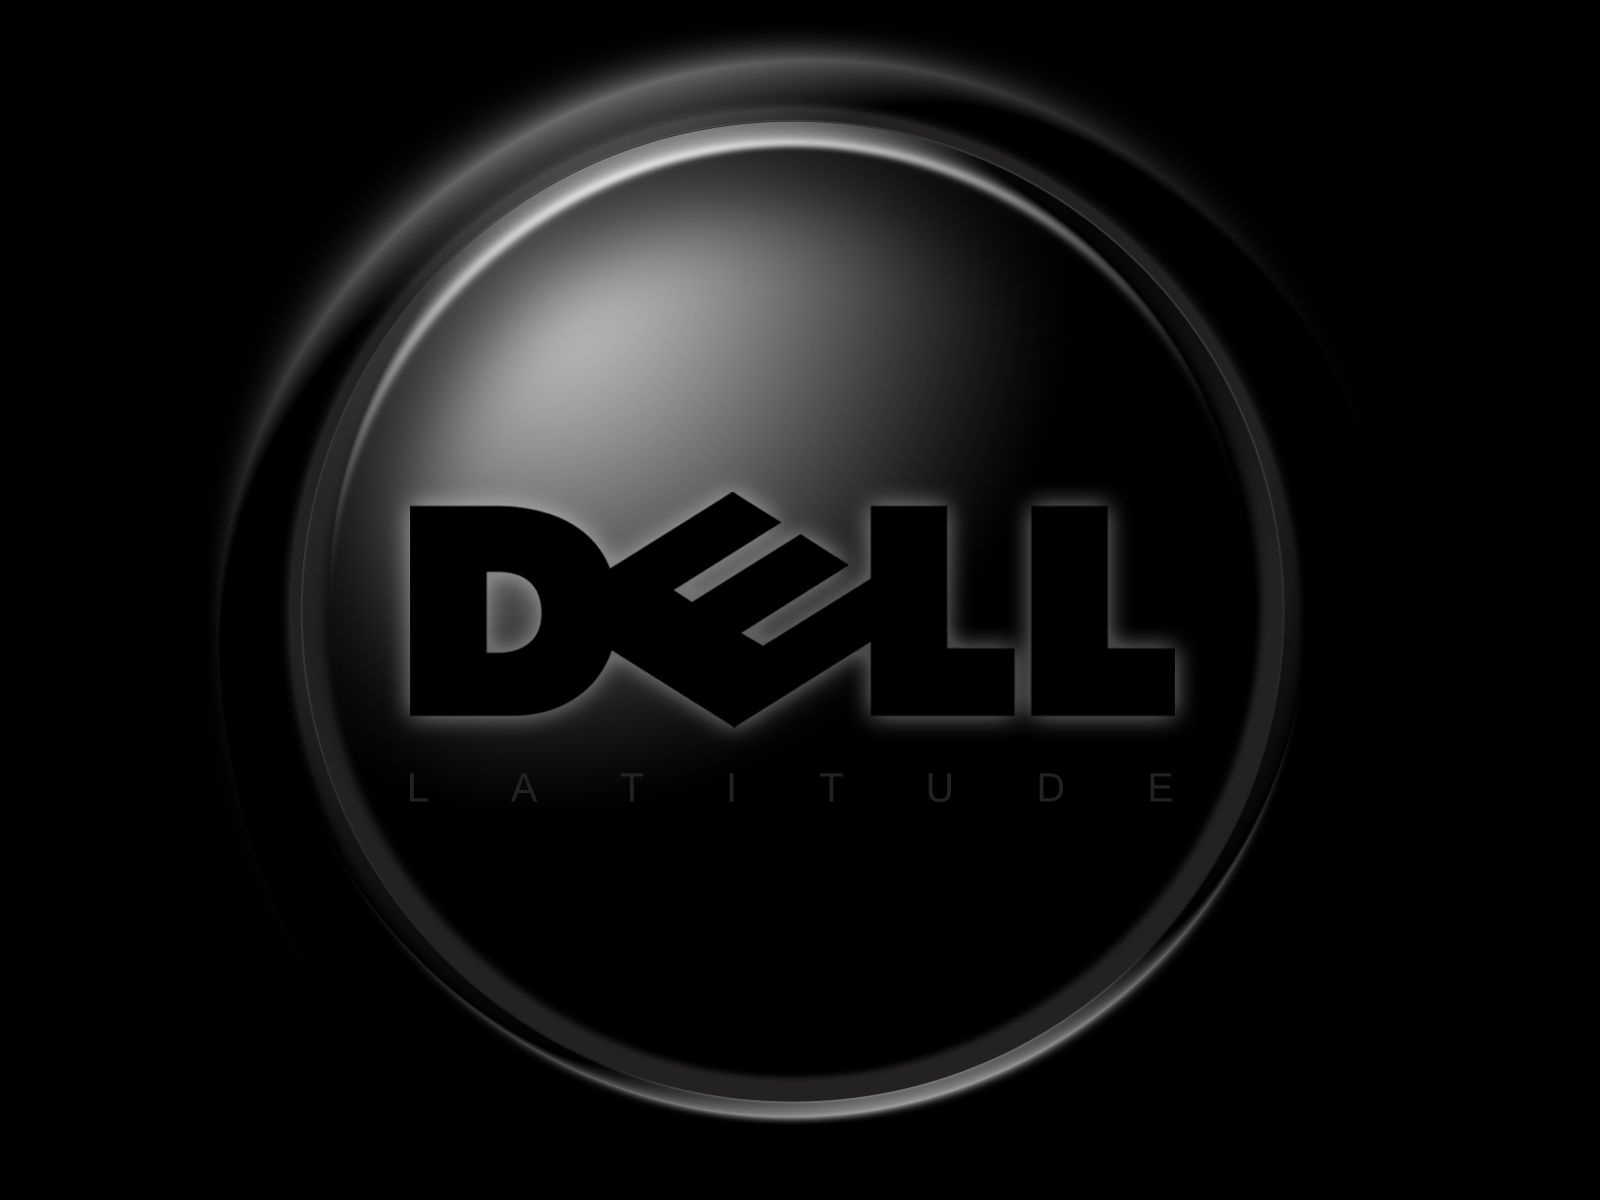 HD Dell Background & Dell Wallpaper .wonderfulengineering.com